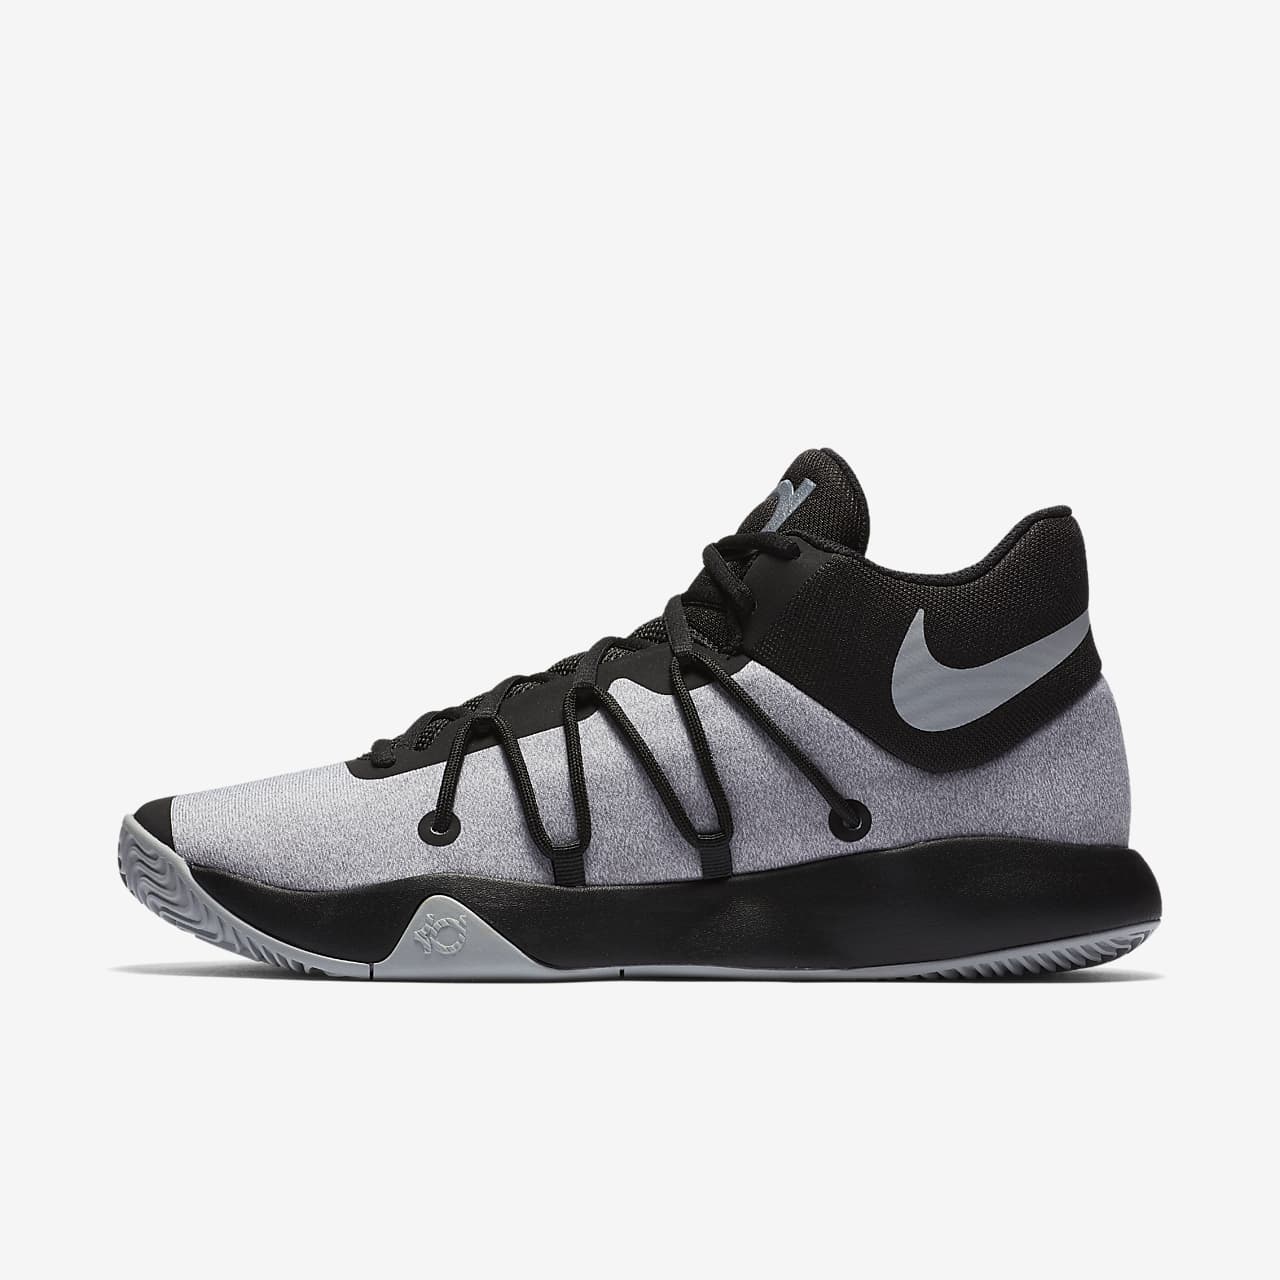 kd trey 5 basketball shoes